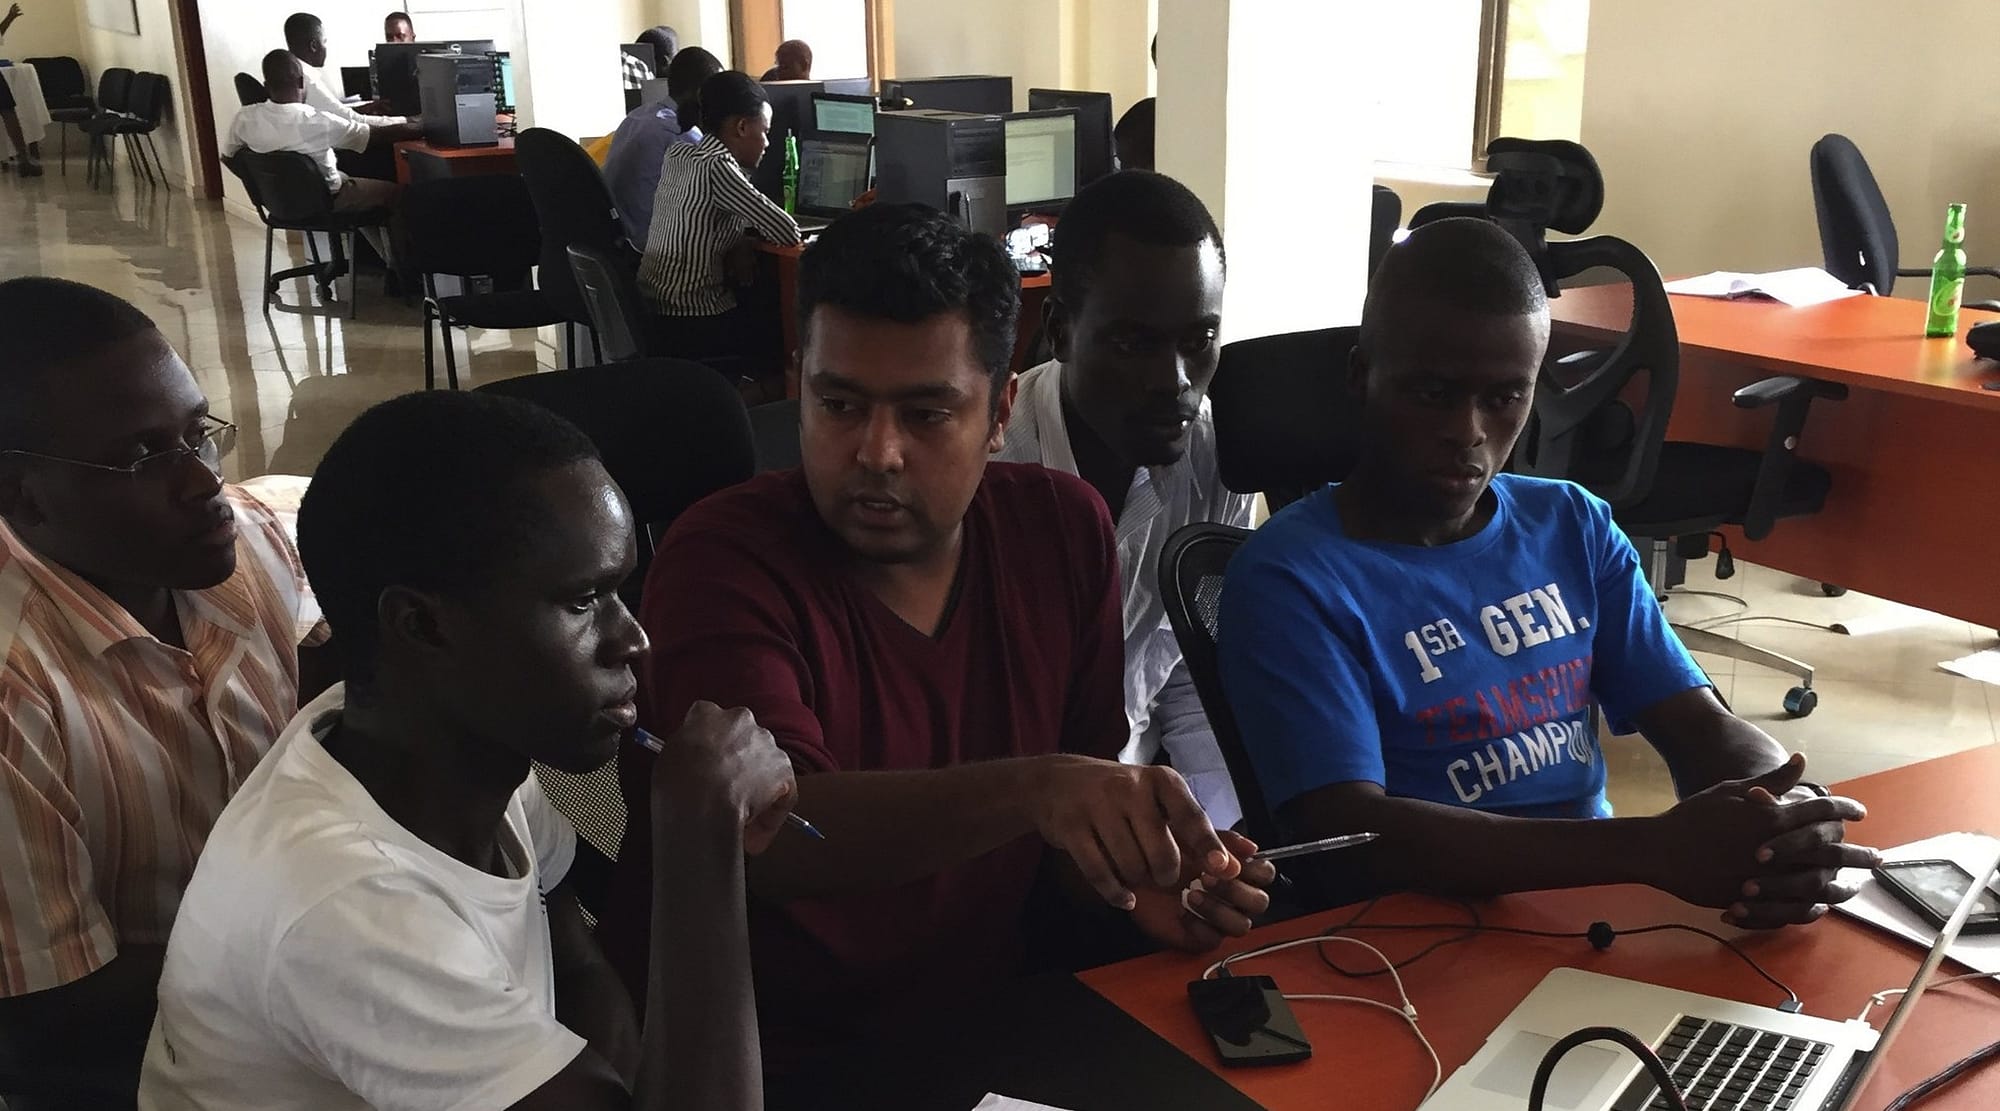 Microsoft developer Anand Mariappan, center, works with local tech-startup employees in Kampala, Uganda as part of Microsoft's International Skills-based Volunteering Program - MySkills4Afrika (Mariappan)